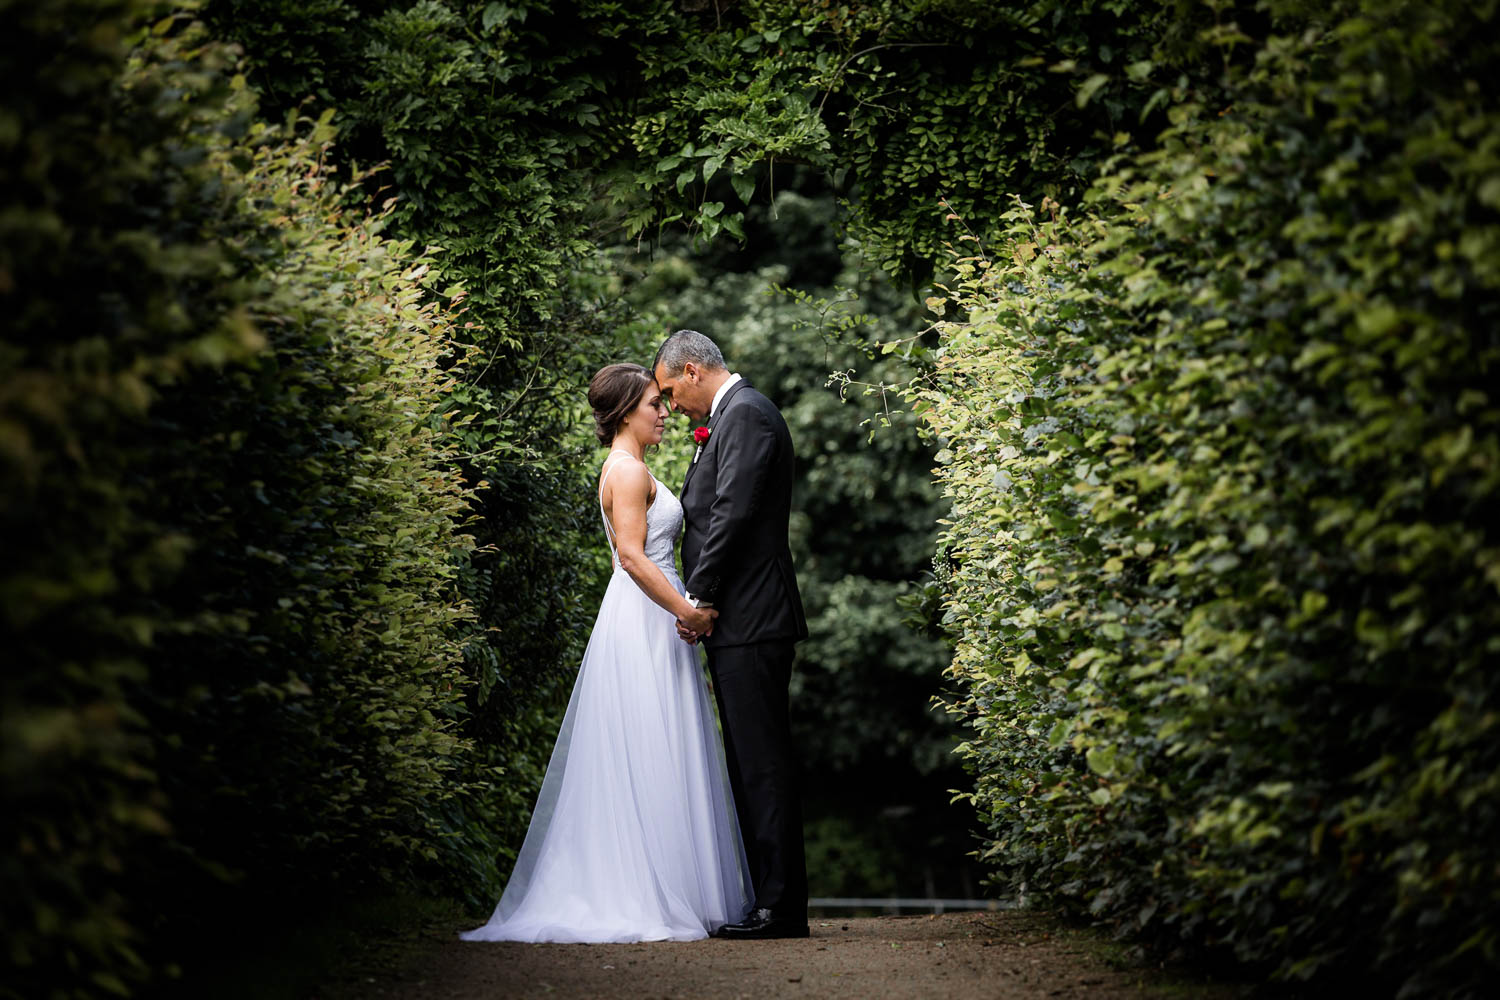 Choosing your wedding photographer | Holst Photography Ireland